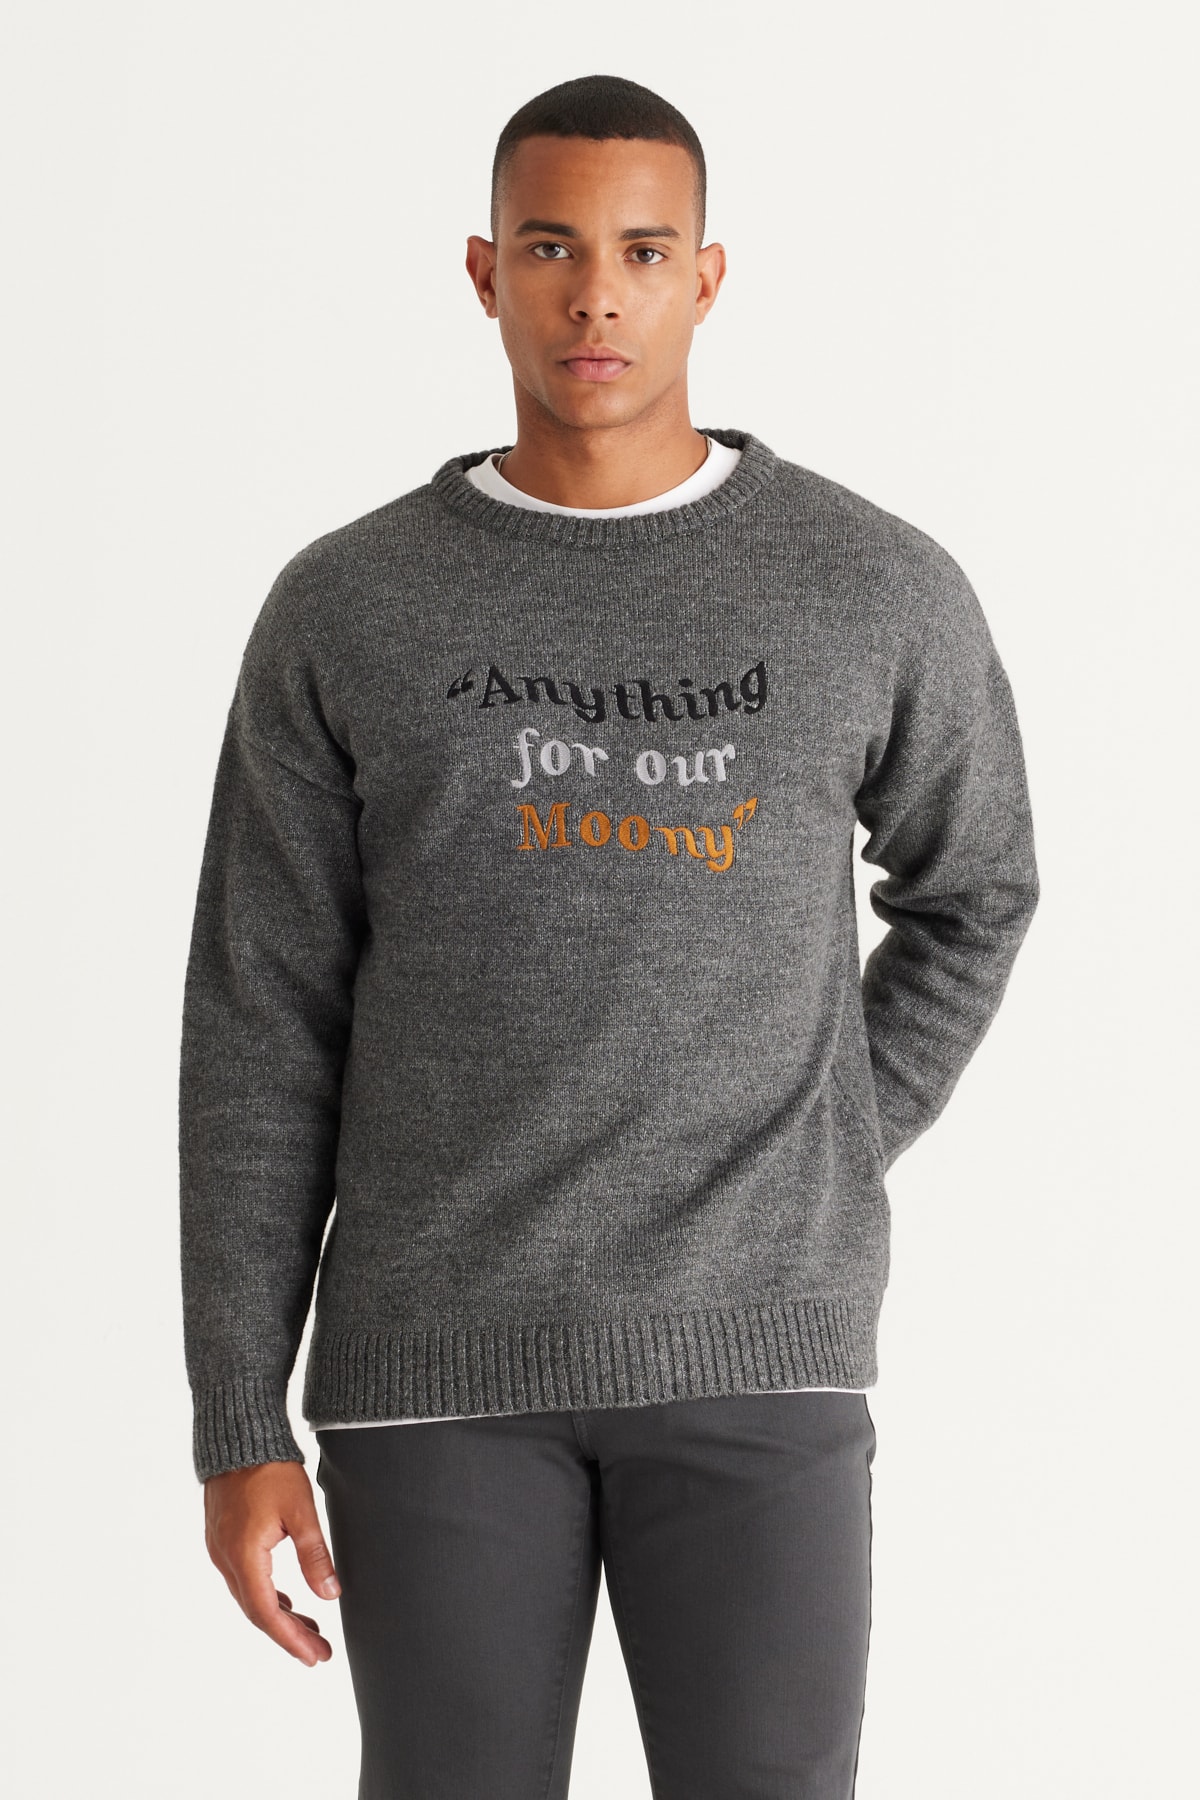 AC&Co / Altınyıldız Classics Men's Gray Melange Oversize Wide Cut Crew Neck Patterned Soft Textured Knitwear Sweater